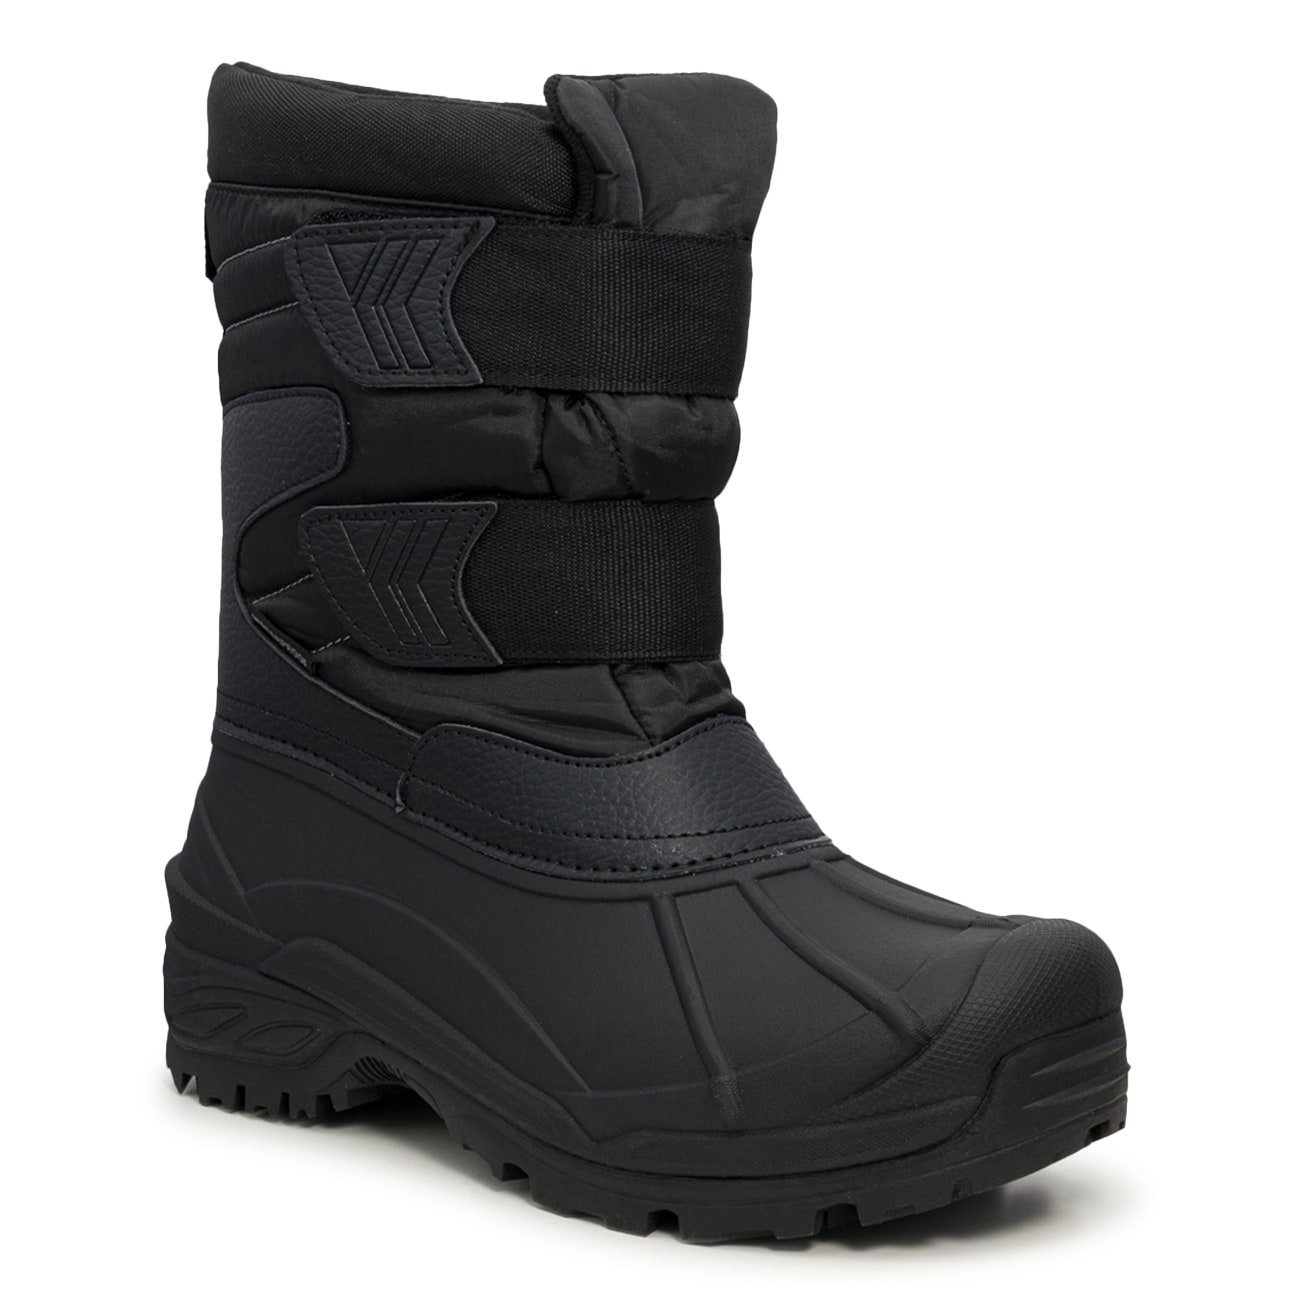 Men's Waterproof Double Strap Winter Boot